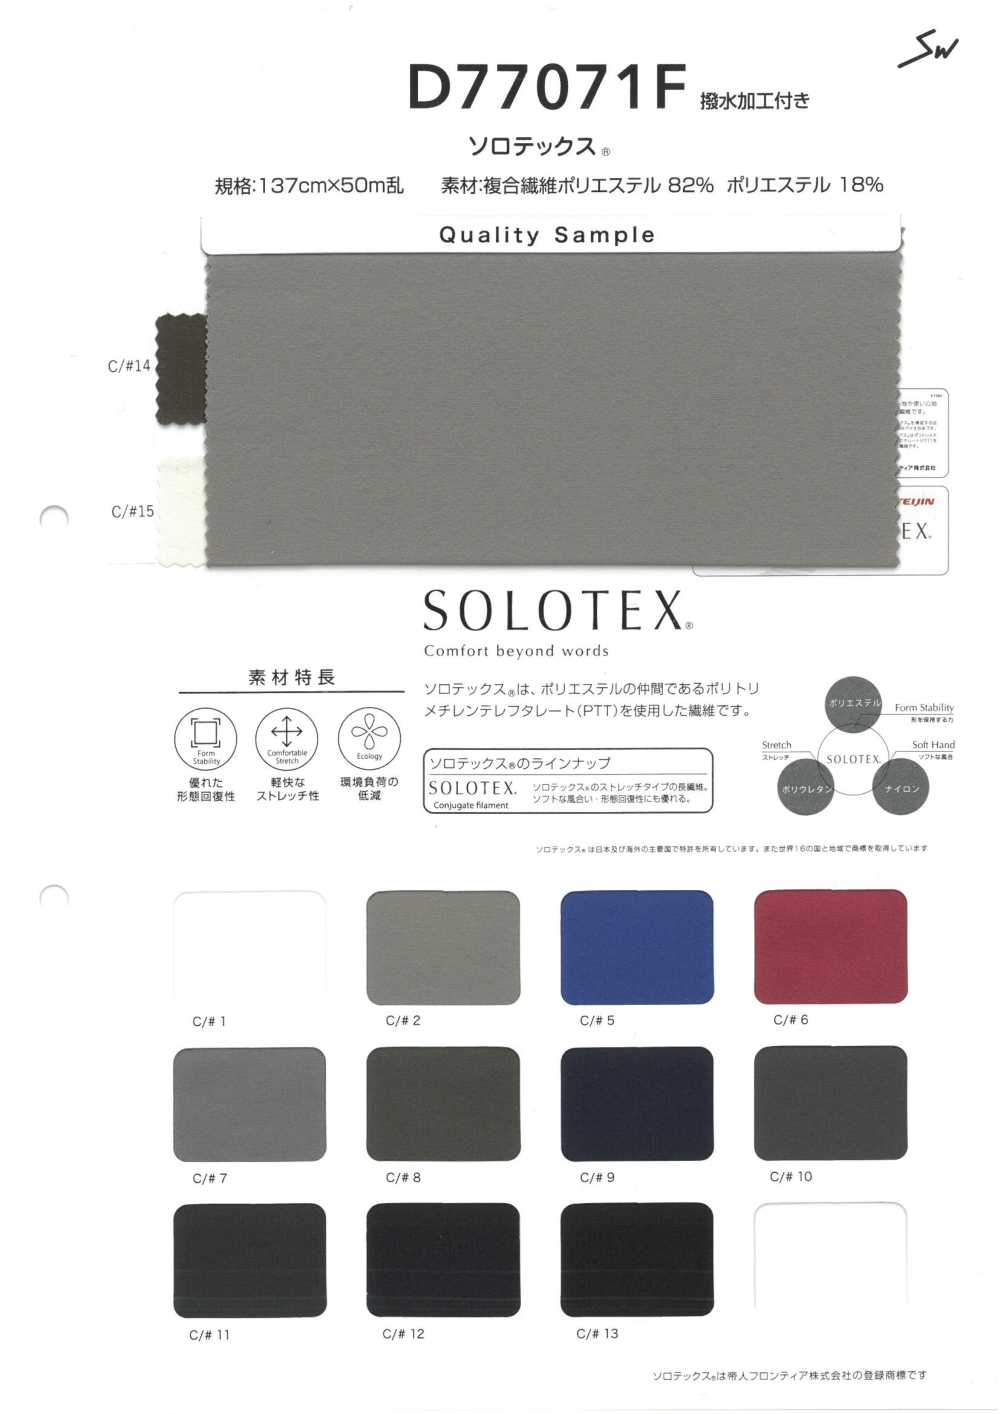 D77071F Solotex[Textile / Fabric] Sanwa Fibers